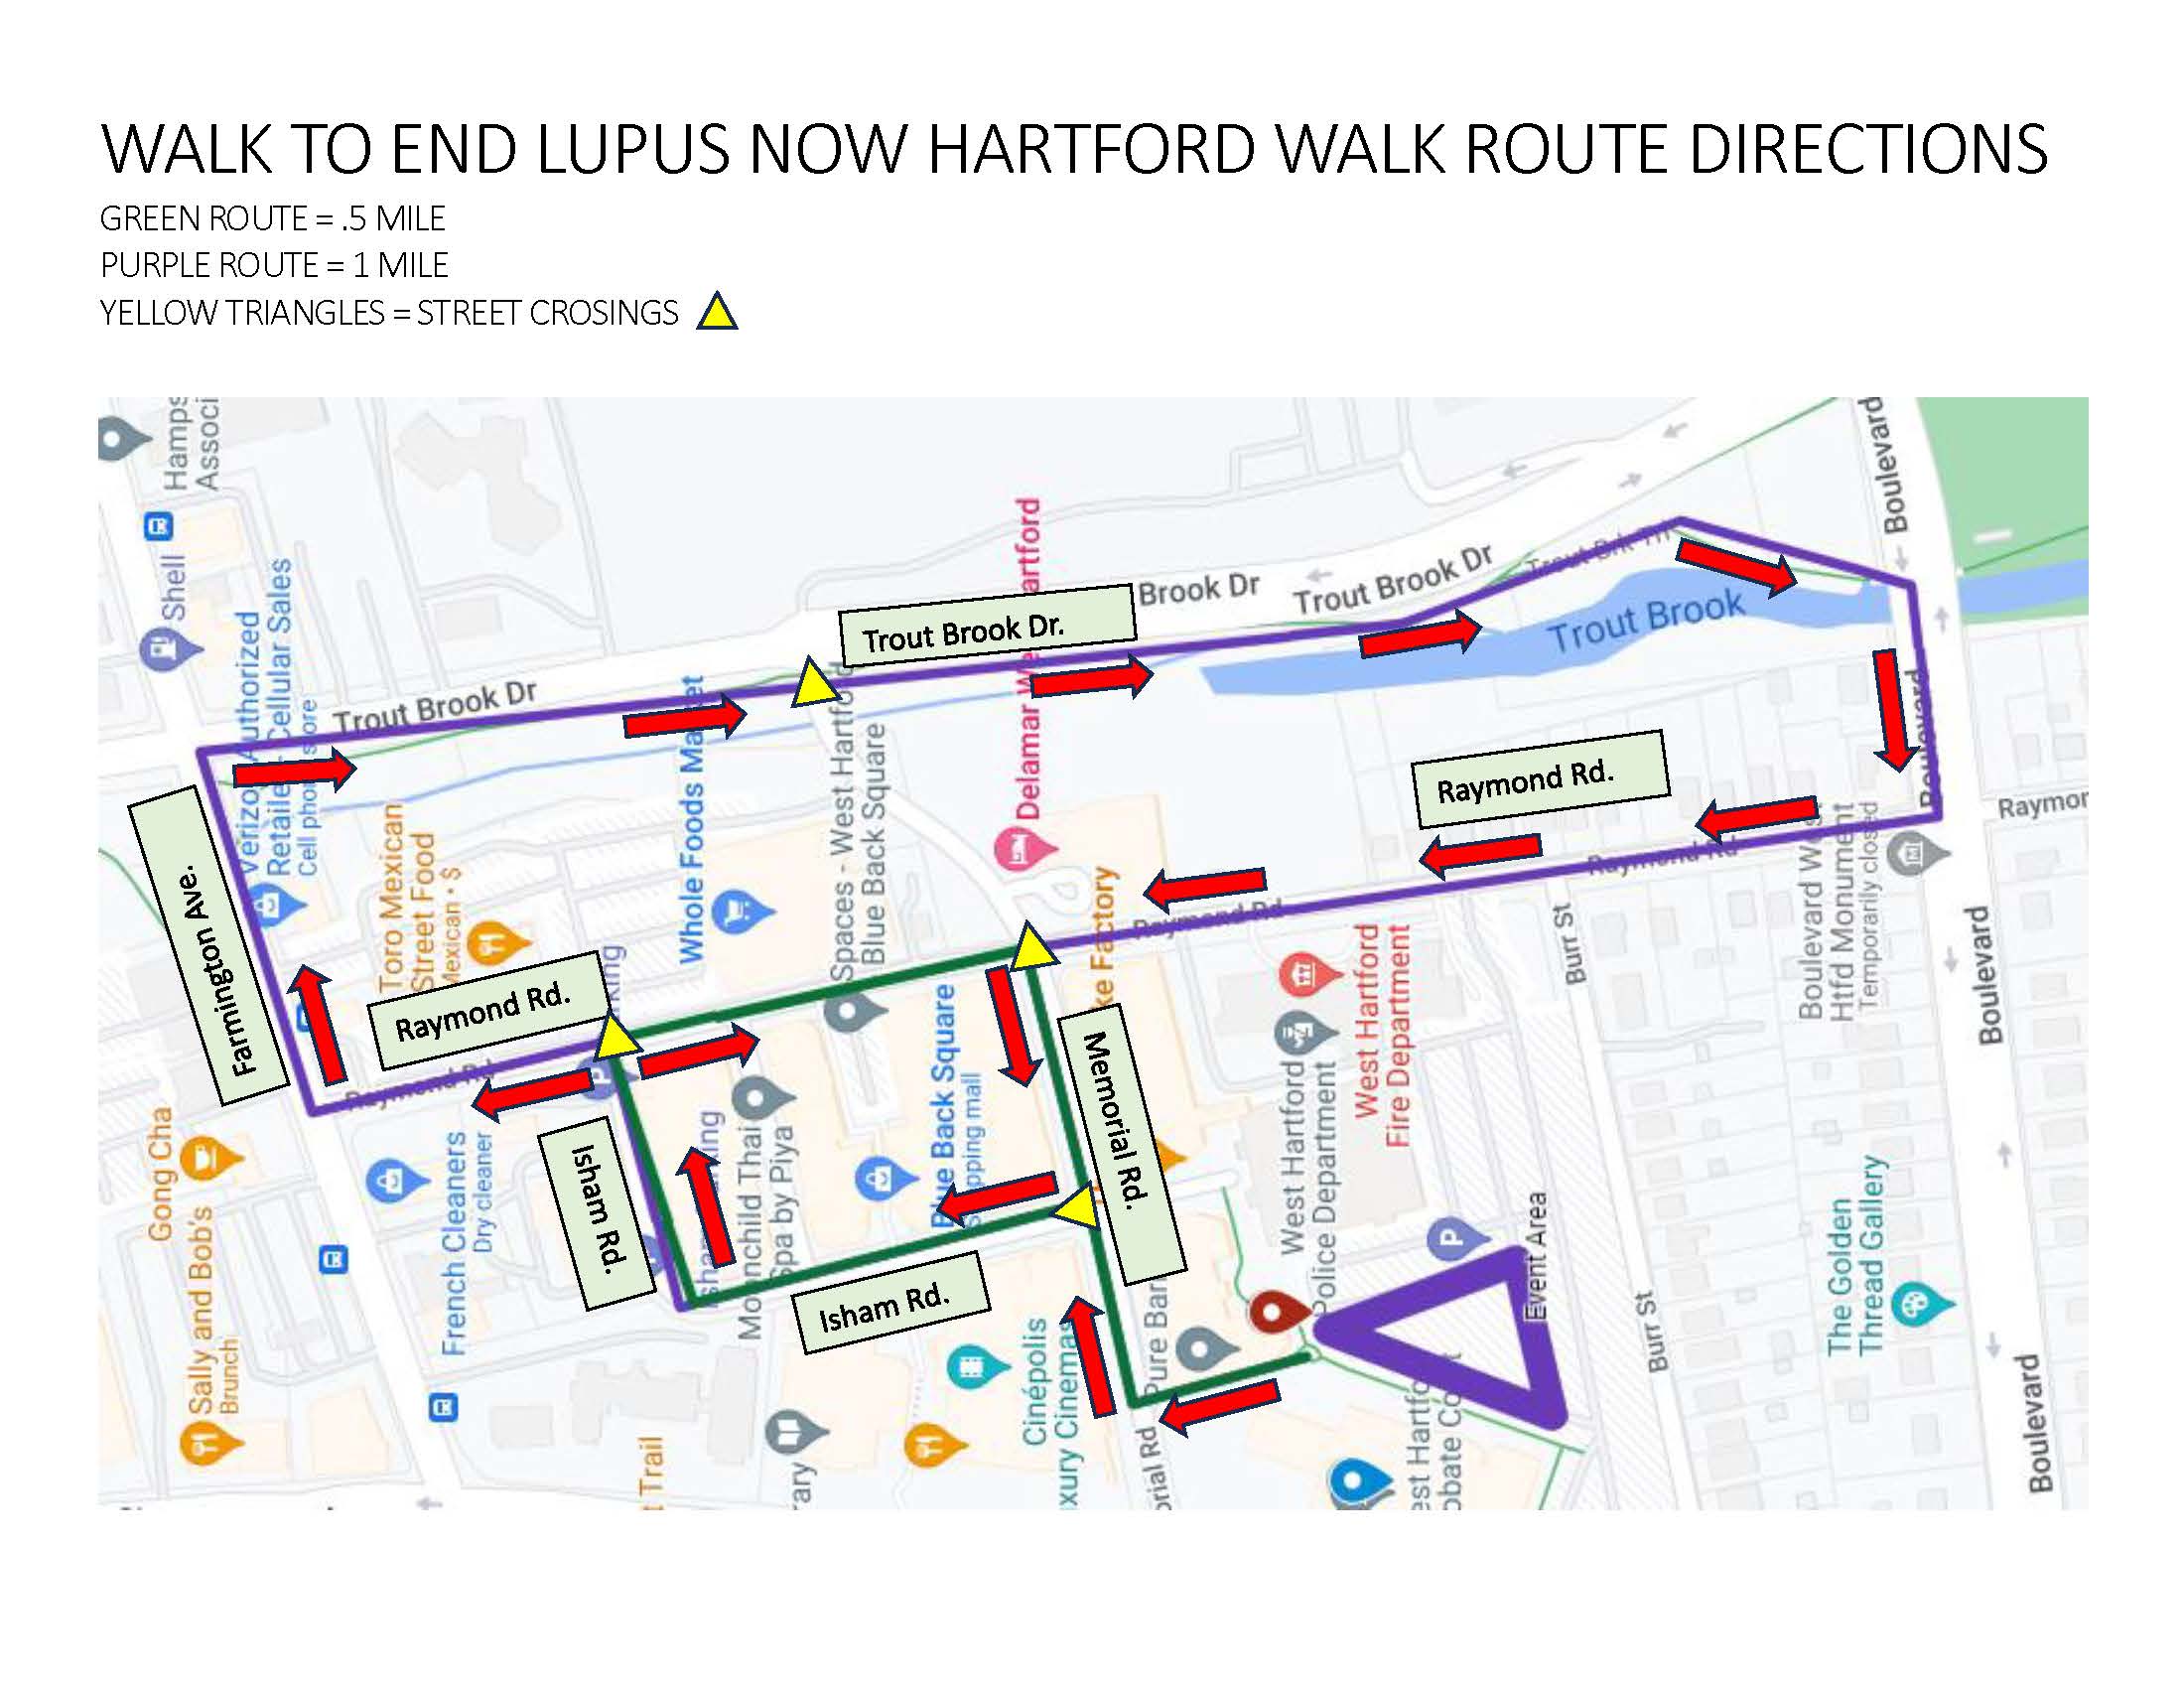 2023 Hartford Walk Route Directions 9.26.23.jpg